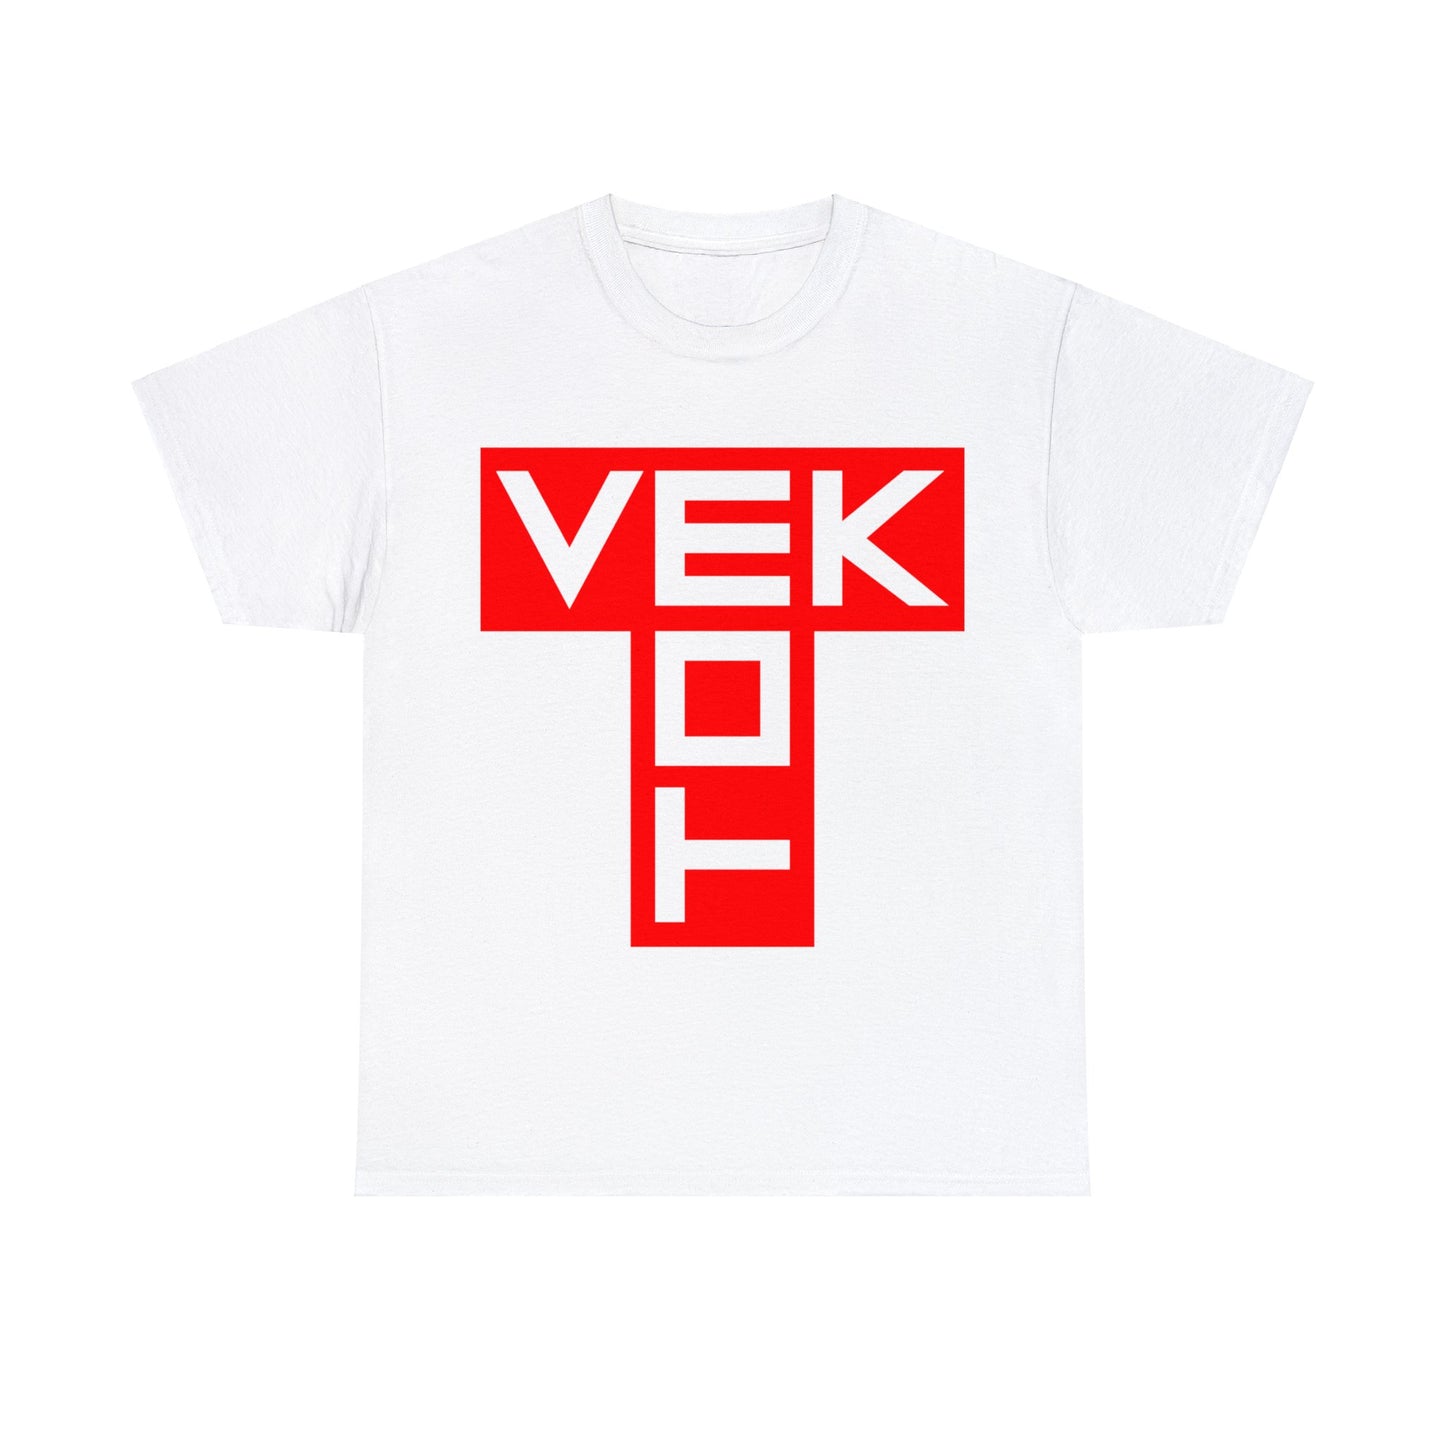 Tom Vek Big T logo UK white T-shirt